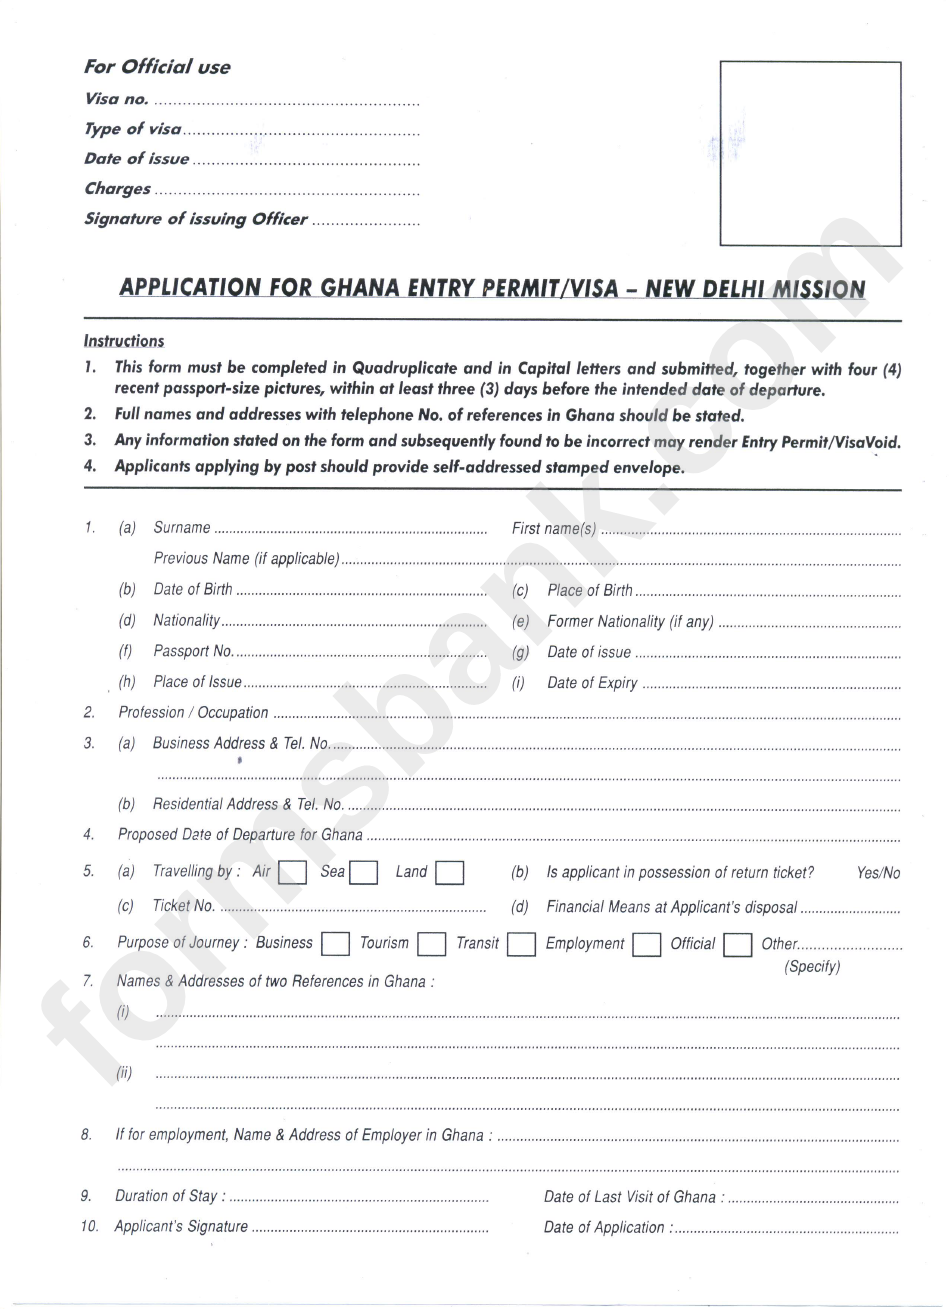 application-for-ghana-entry-permit-visa-new-delhi-mission-printable